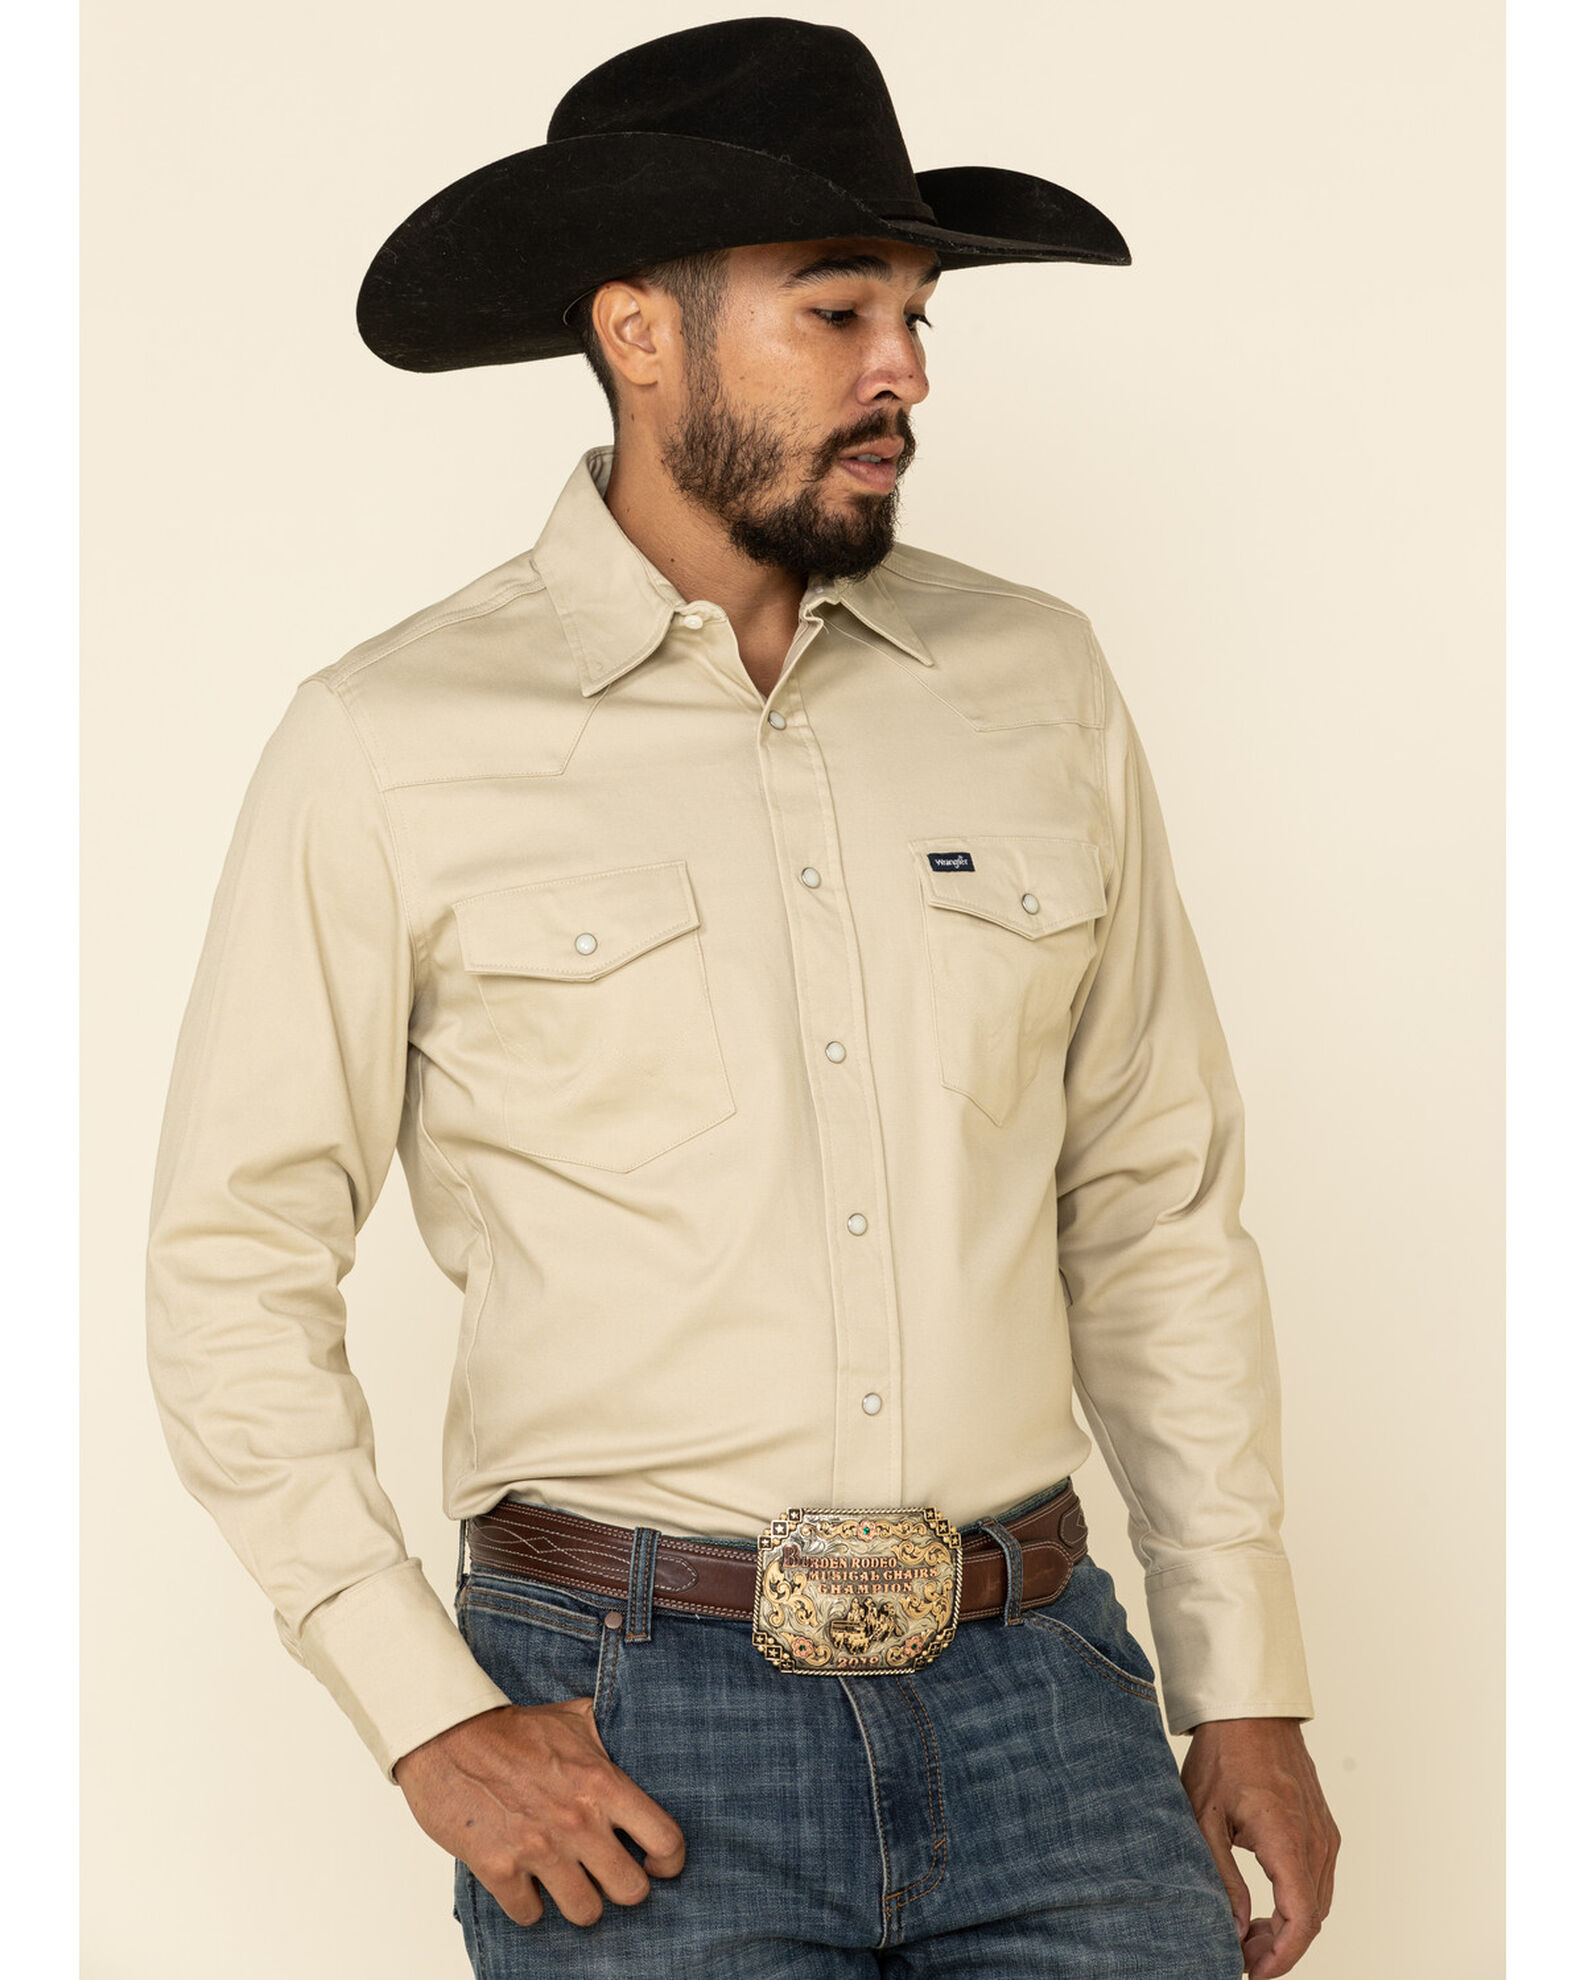 Product Name: Wrangler Men's Solid Advanced Comfort Long Sleeve Work Shirt